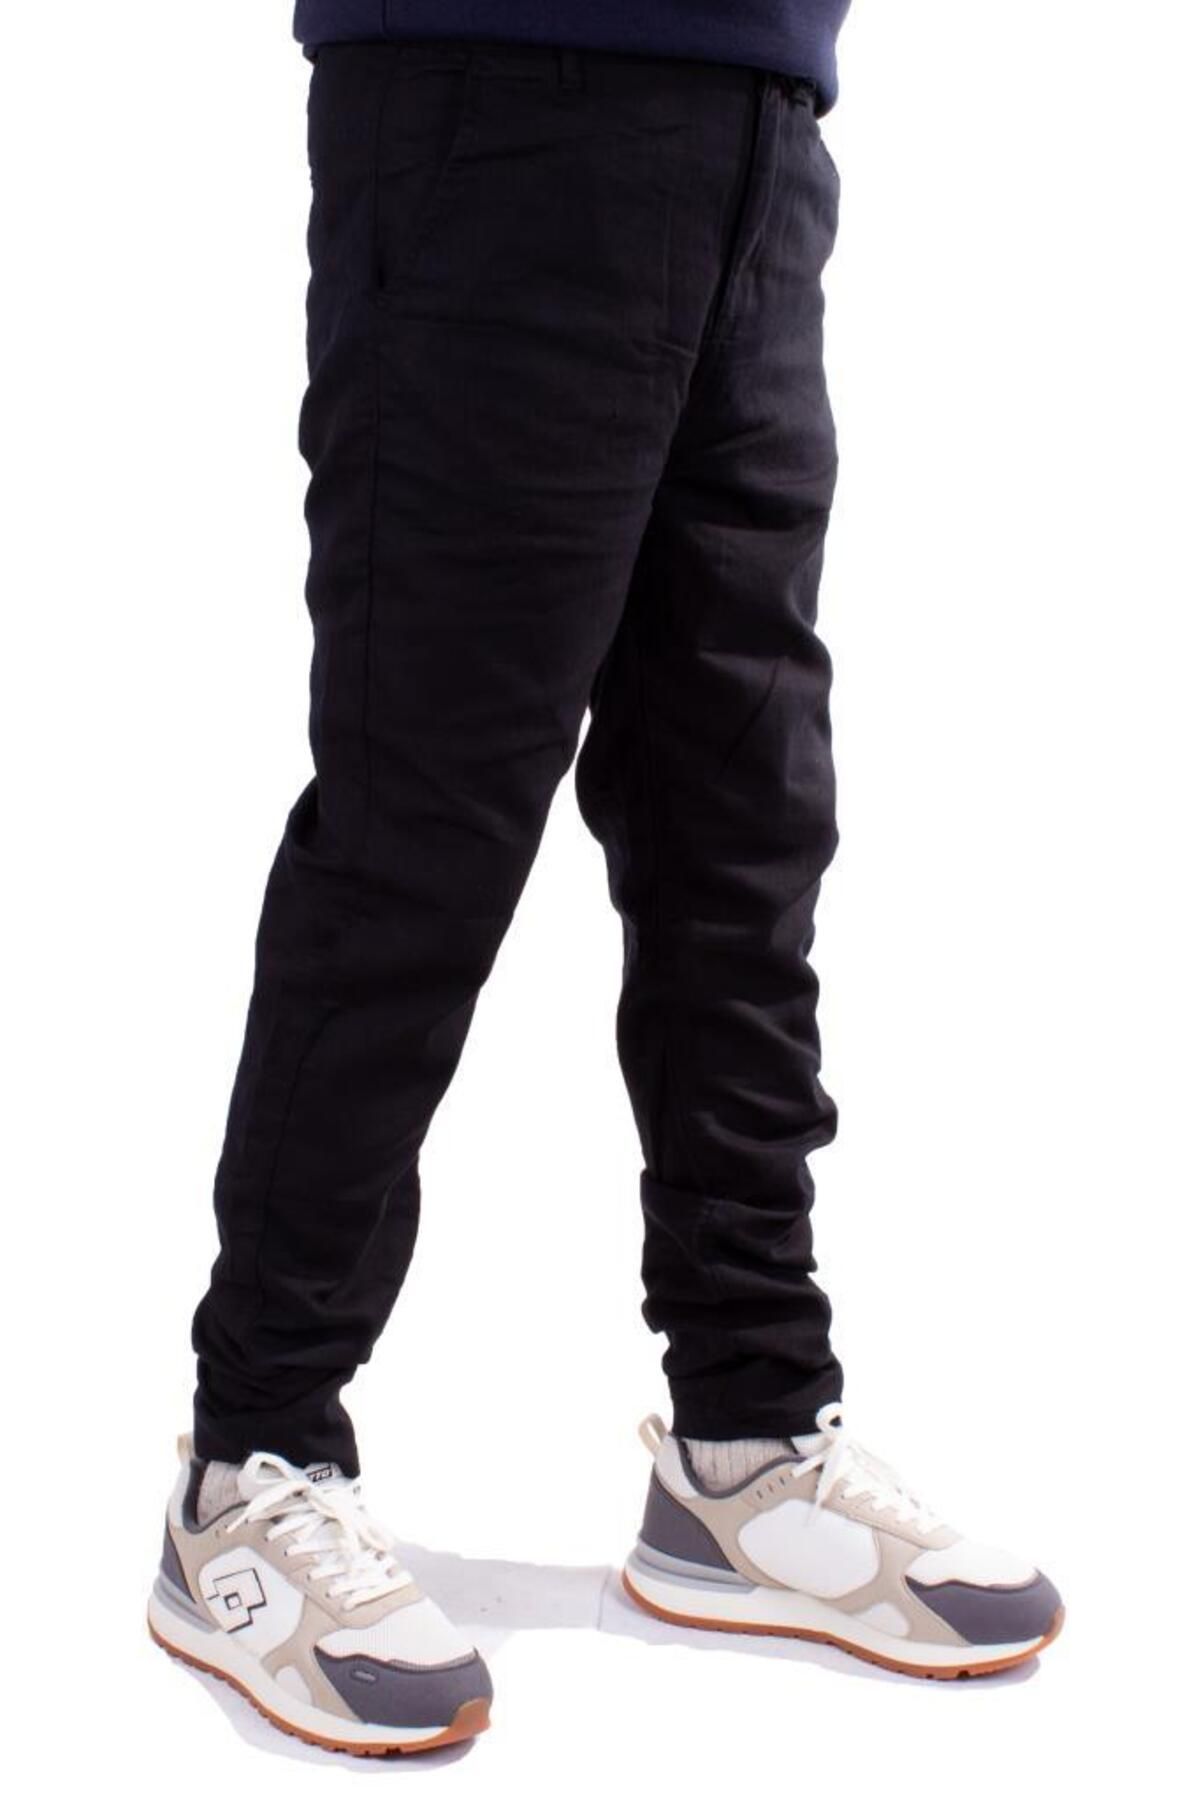 Twister Jeans Twister Slim Jogger-011C Siyah Yüksek Bel Dar Paça Erkek Keten Pantolon